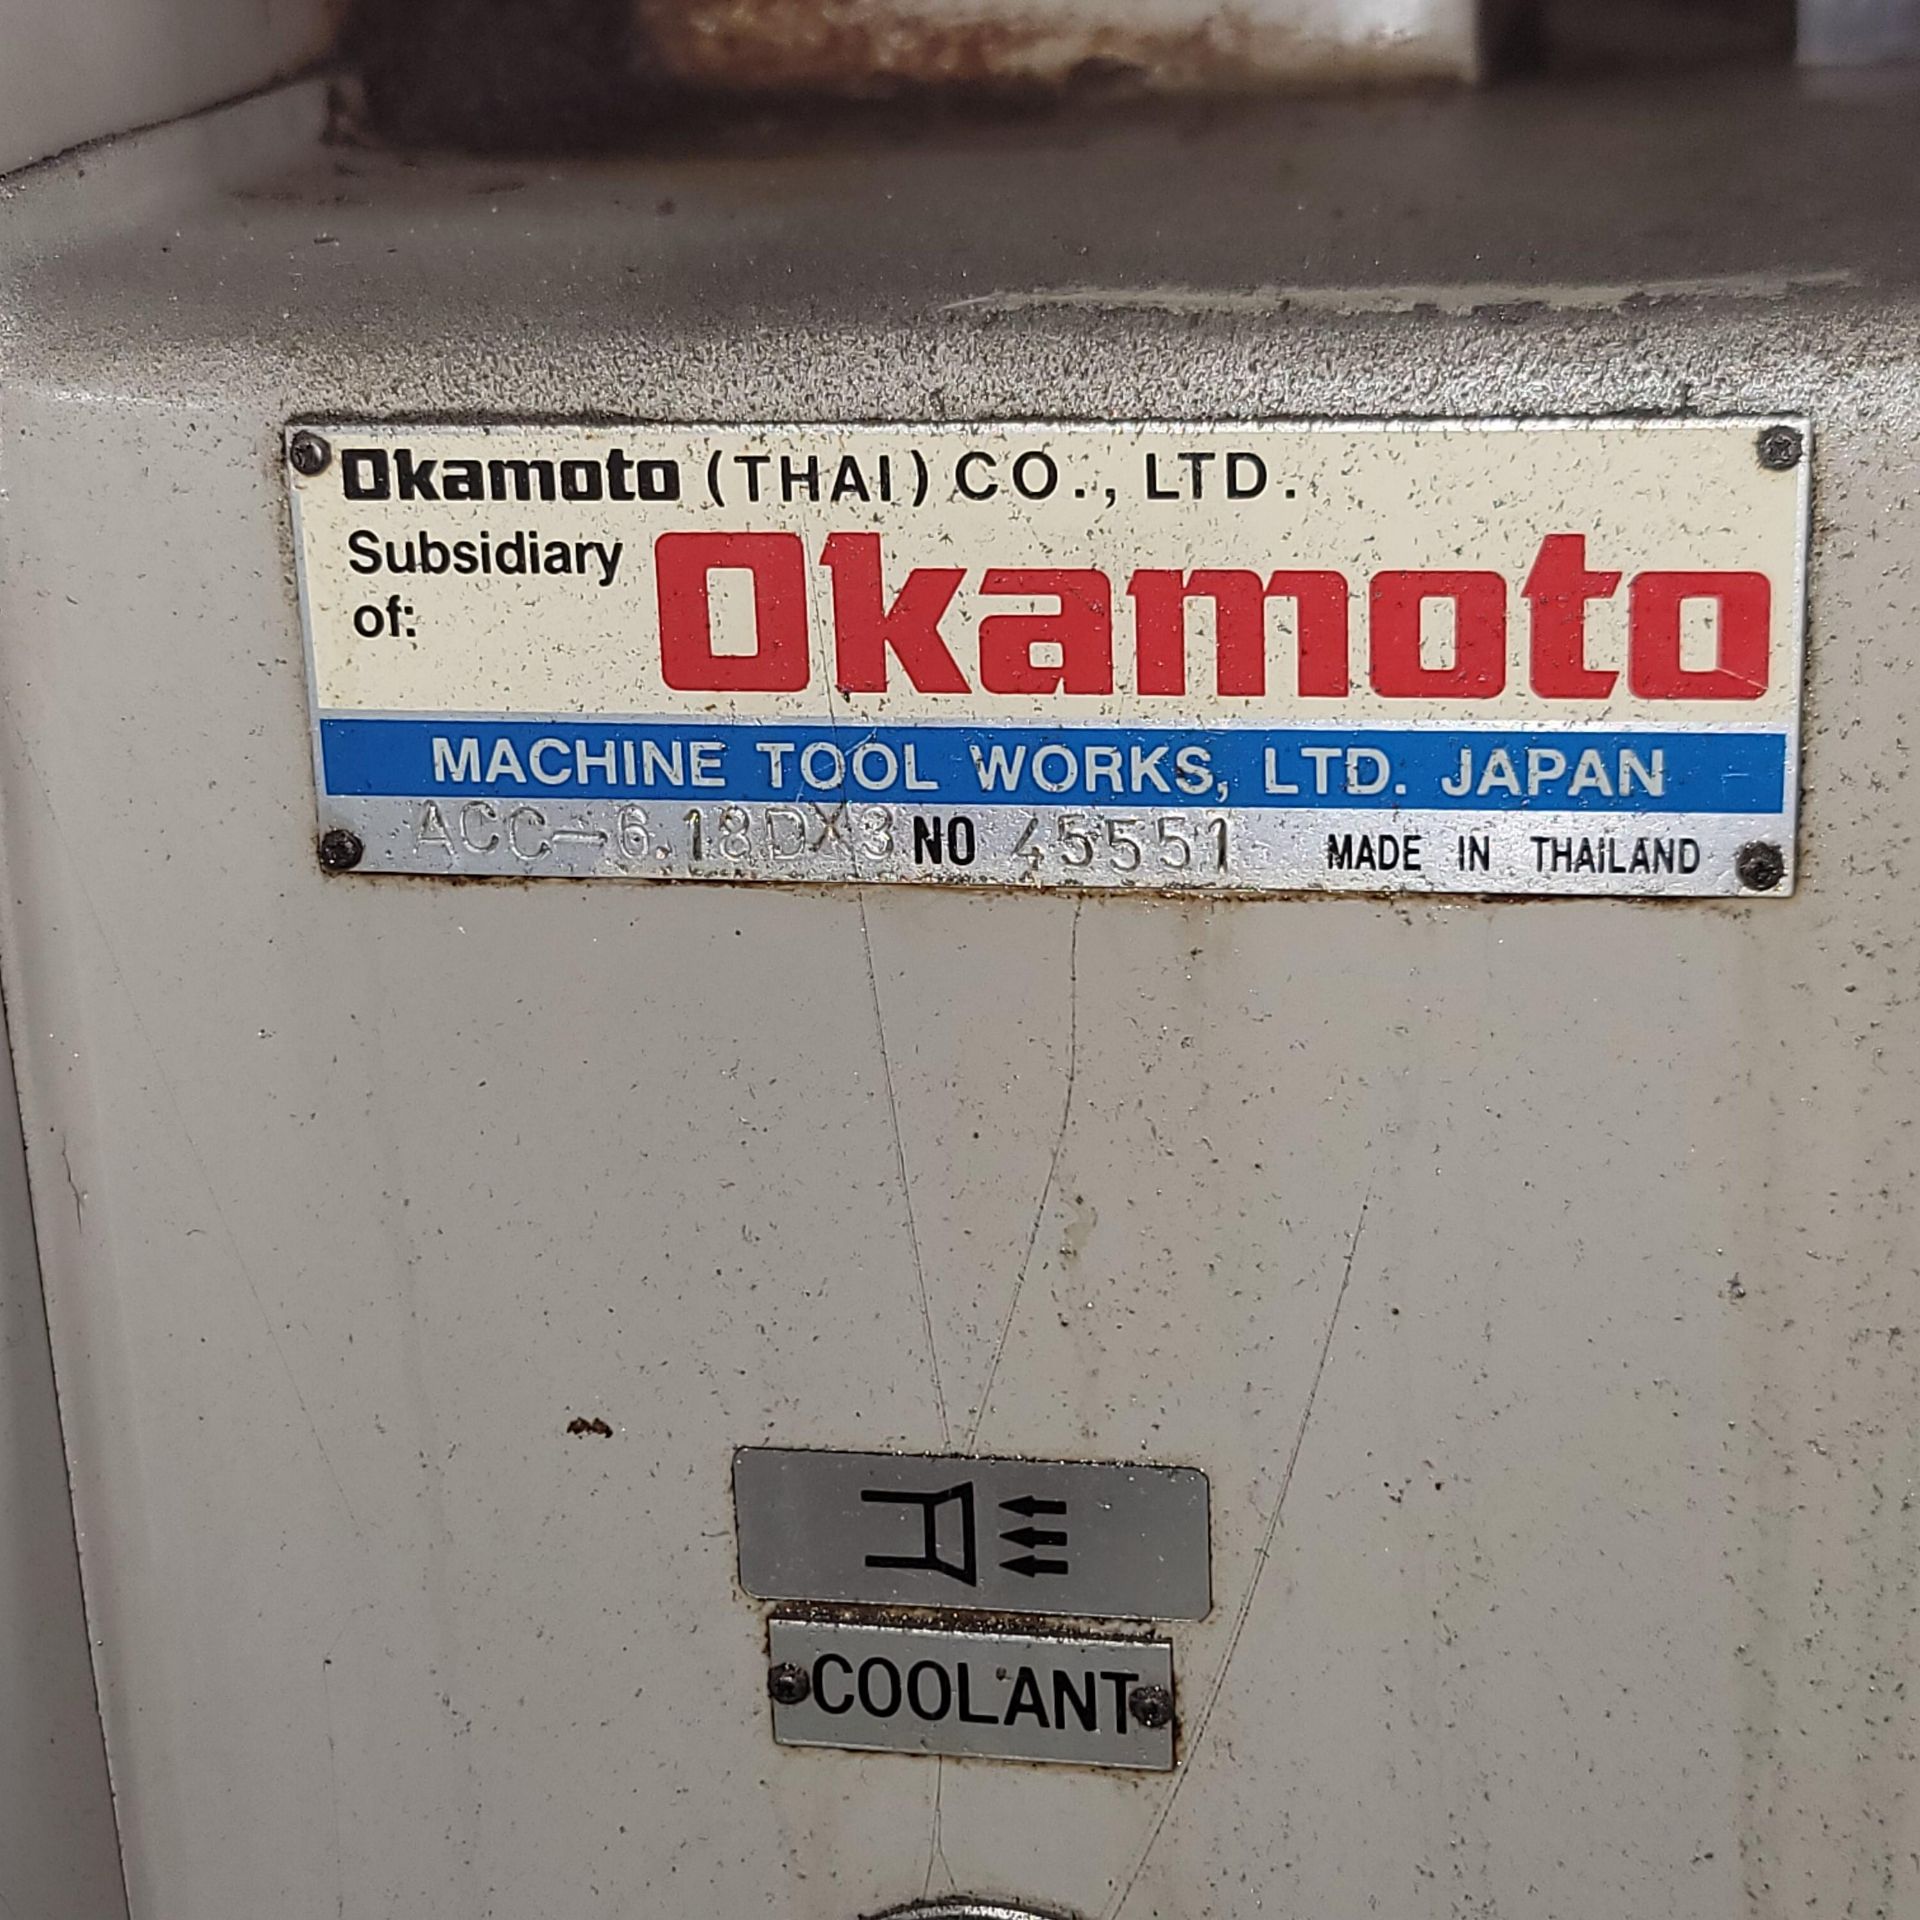 2000 OKAMOTO GRIND-X SURFACE GRINDER, MODEL ACC-618DX3, 6" X 18" MAGNETIC CHUCK, S/N 45551 - Image 8 of 8